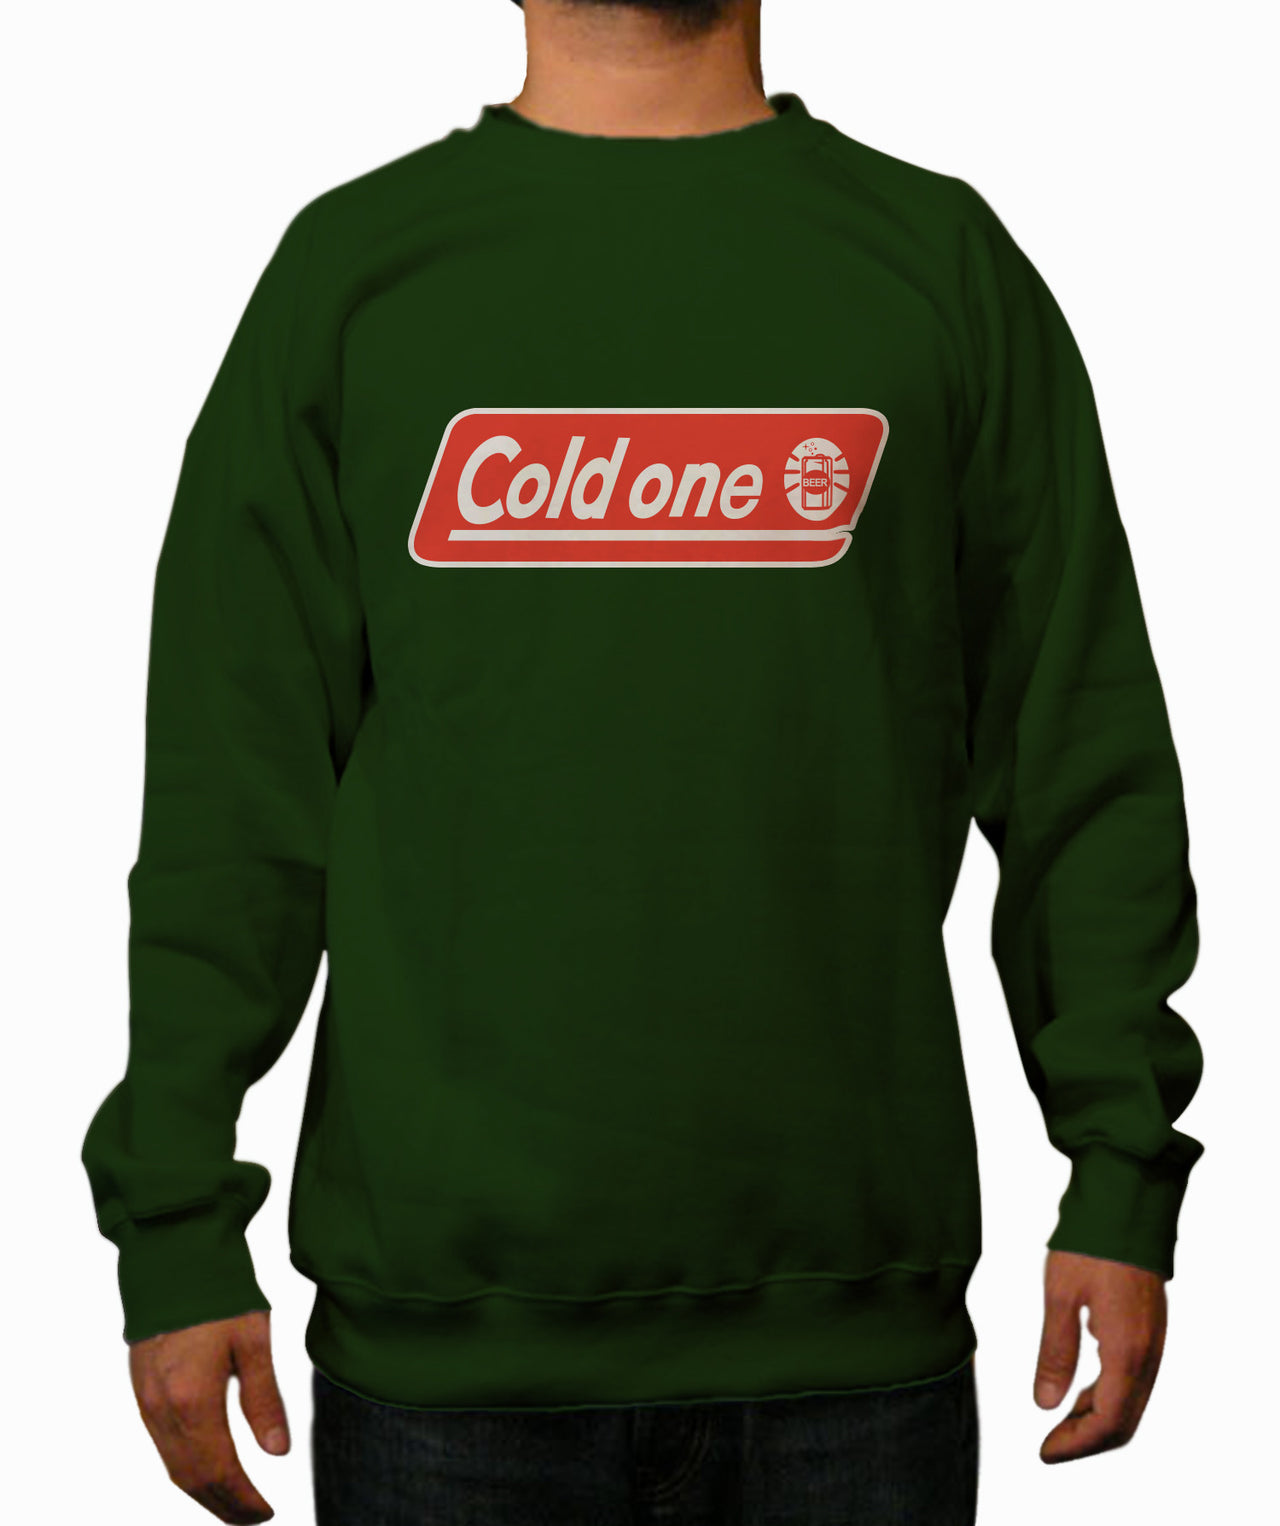 Cold One Dark Green Crewneck Sweatshirt - TshirtNow.net - 1